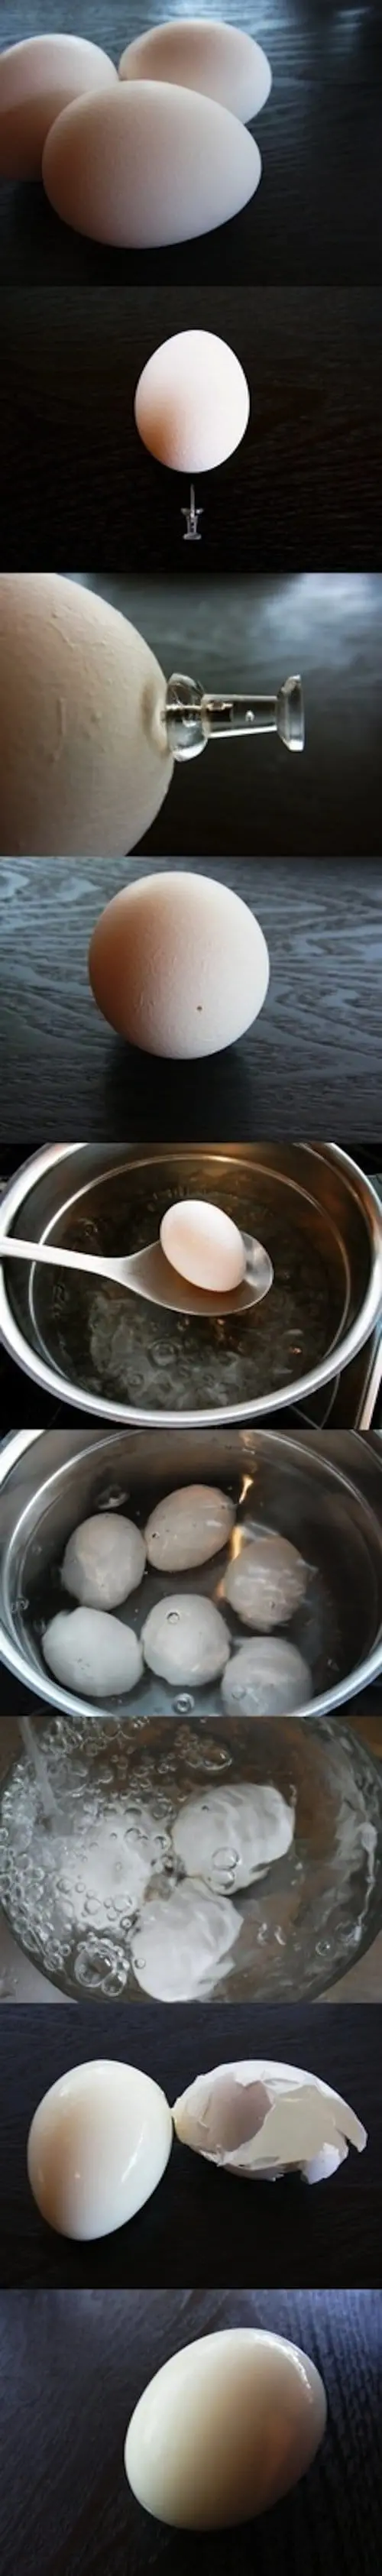 kitchen-boiled-egg